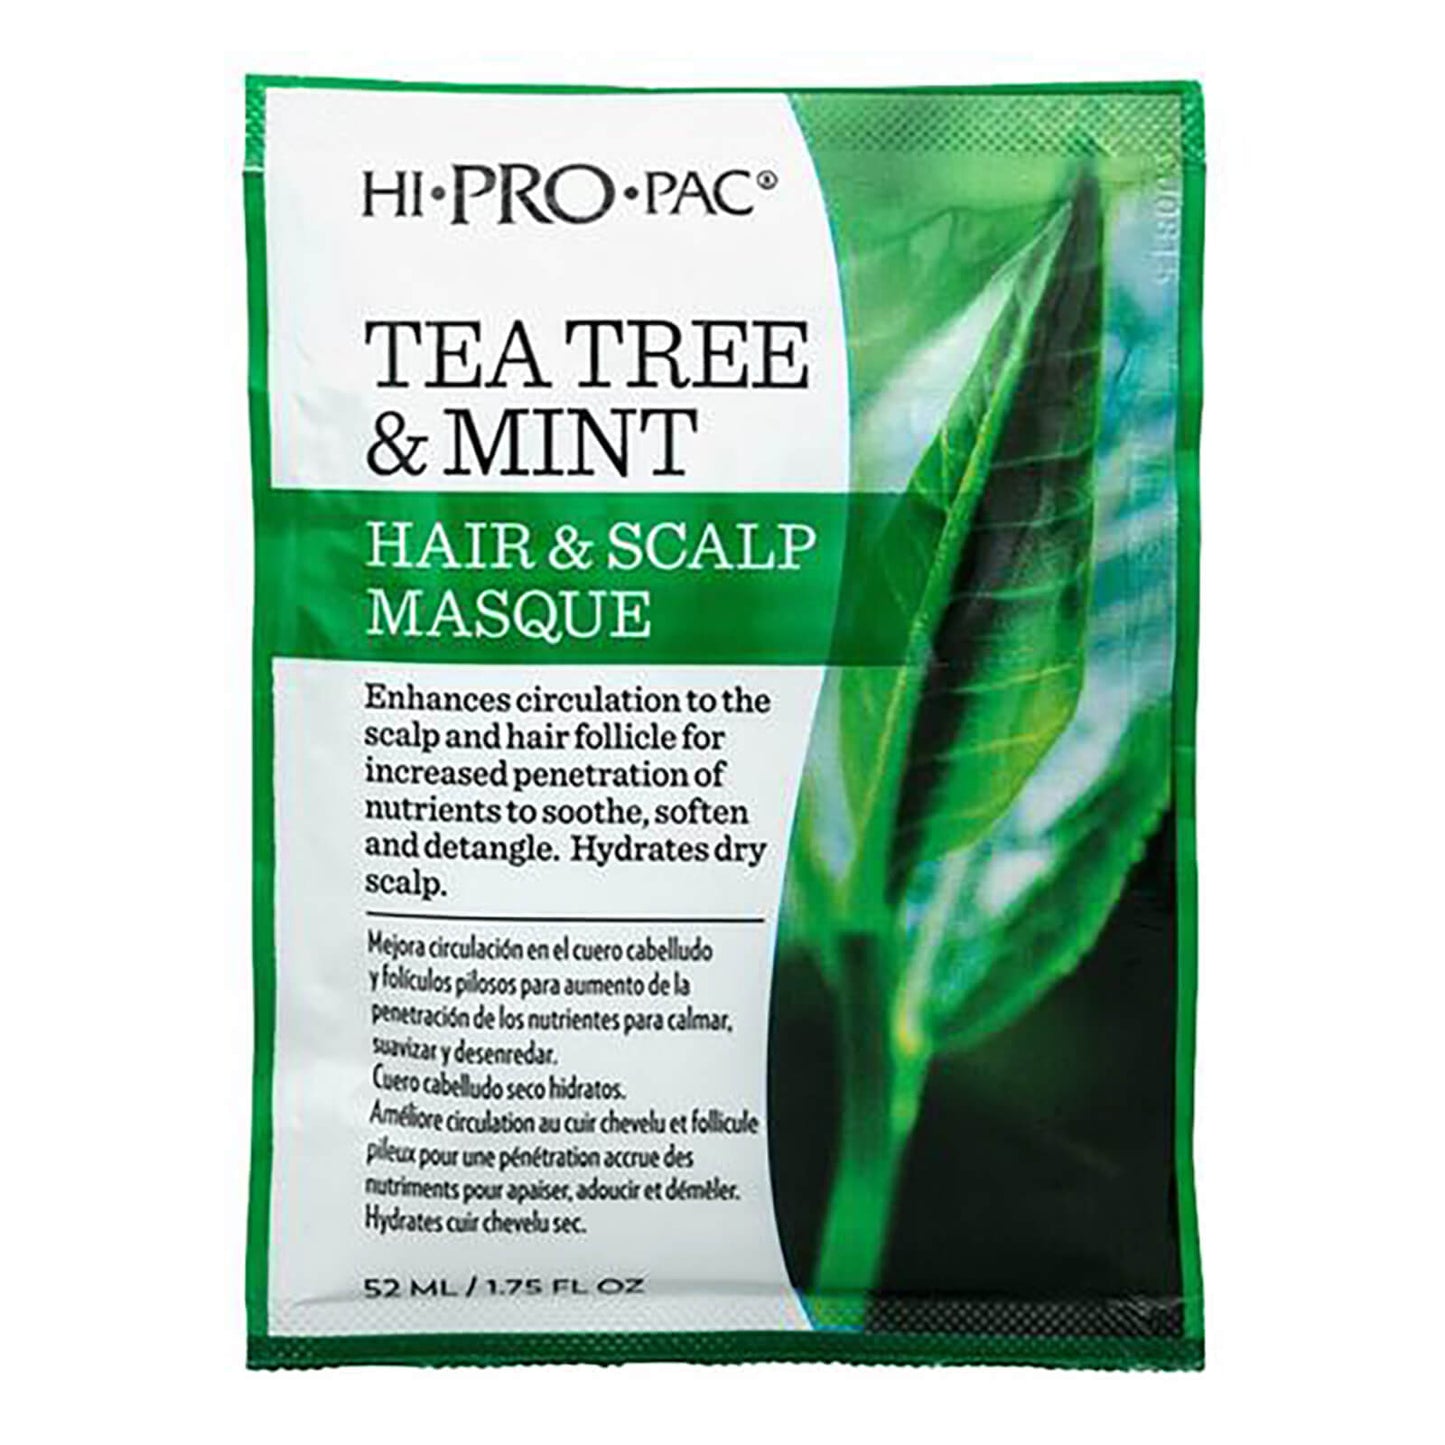 Hi-Pro-Pac Tea Tree & Mint Hair & Scalp Masque 1.75 oz.